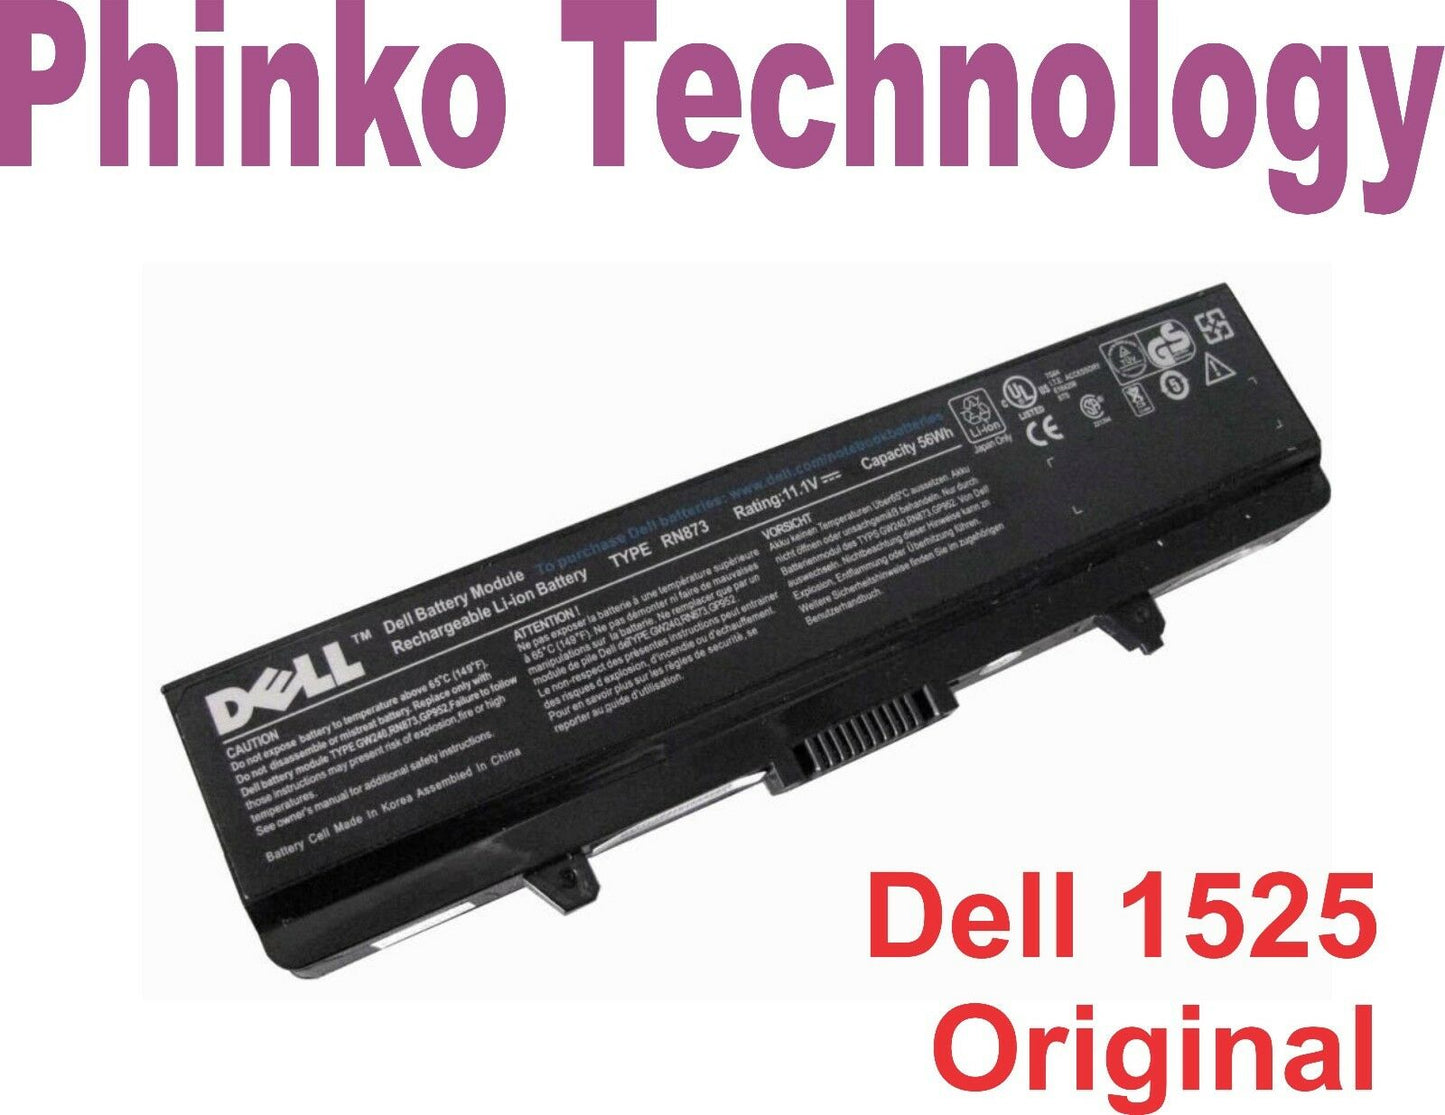 Brand New GENUINE Original Battery For Dell Inspiron 1526 1545 1525 X284G M911G